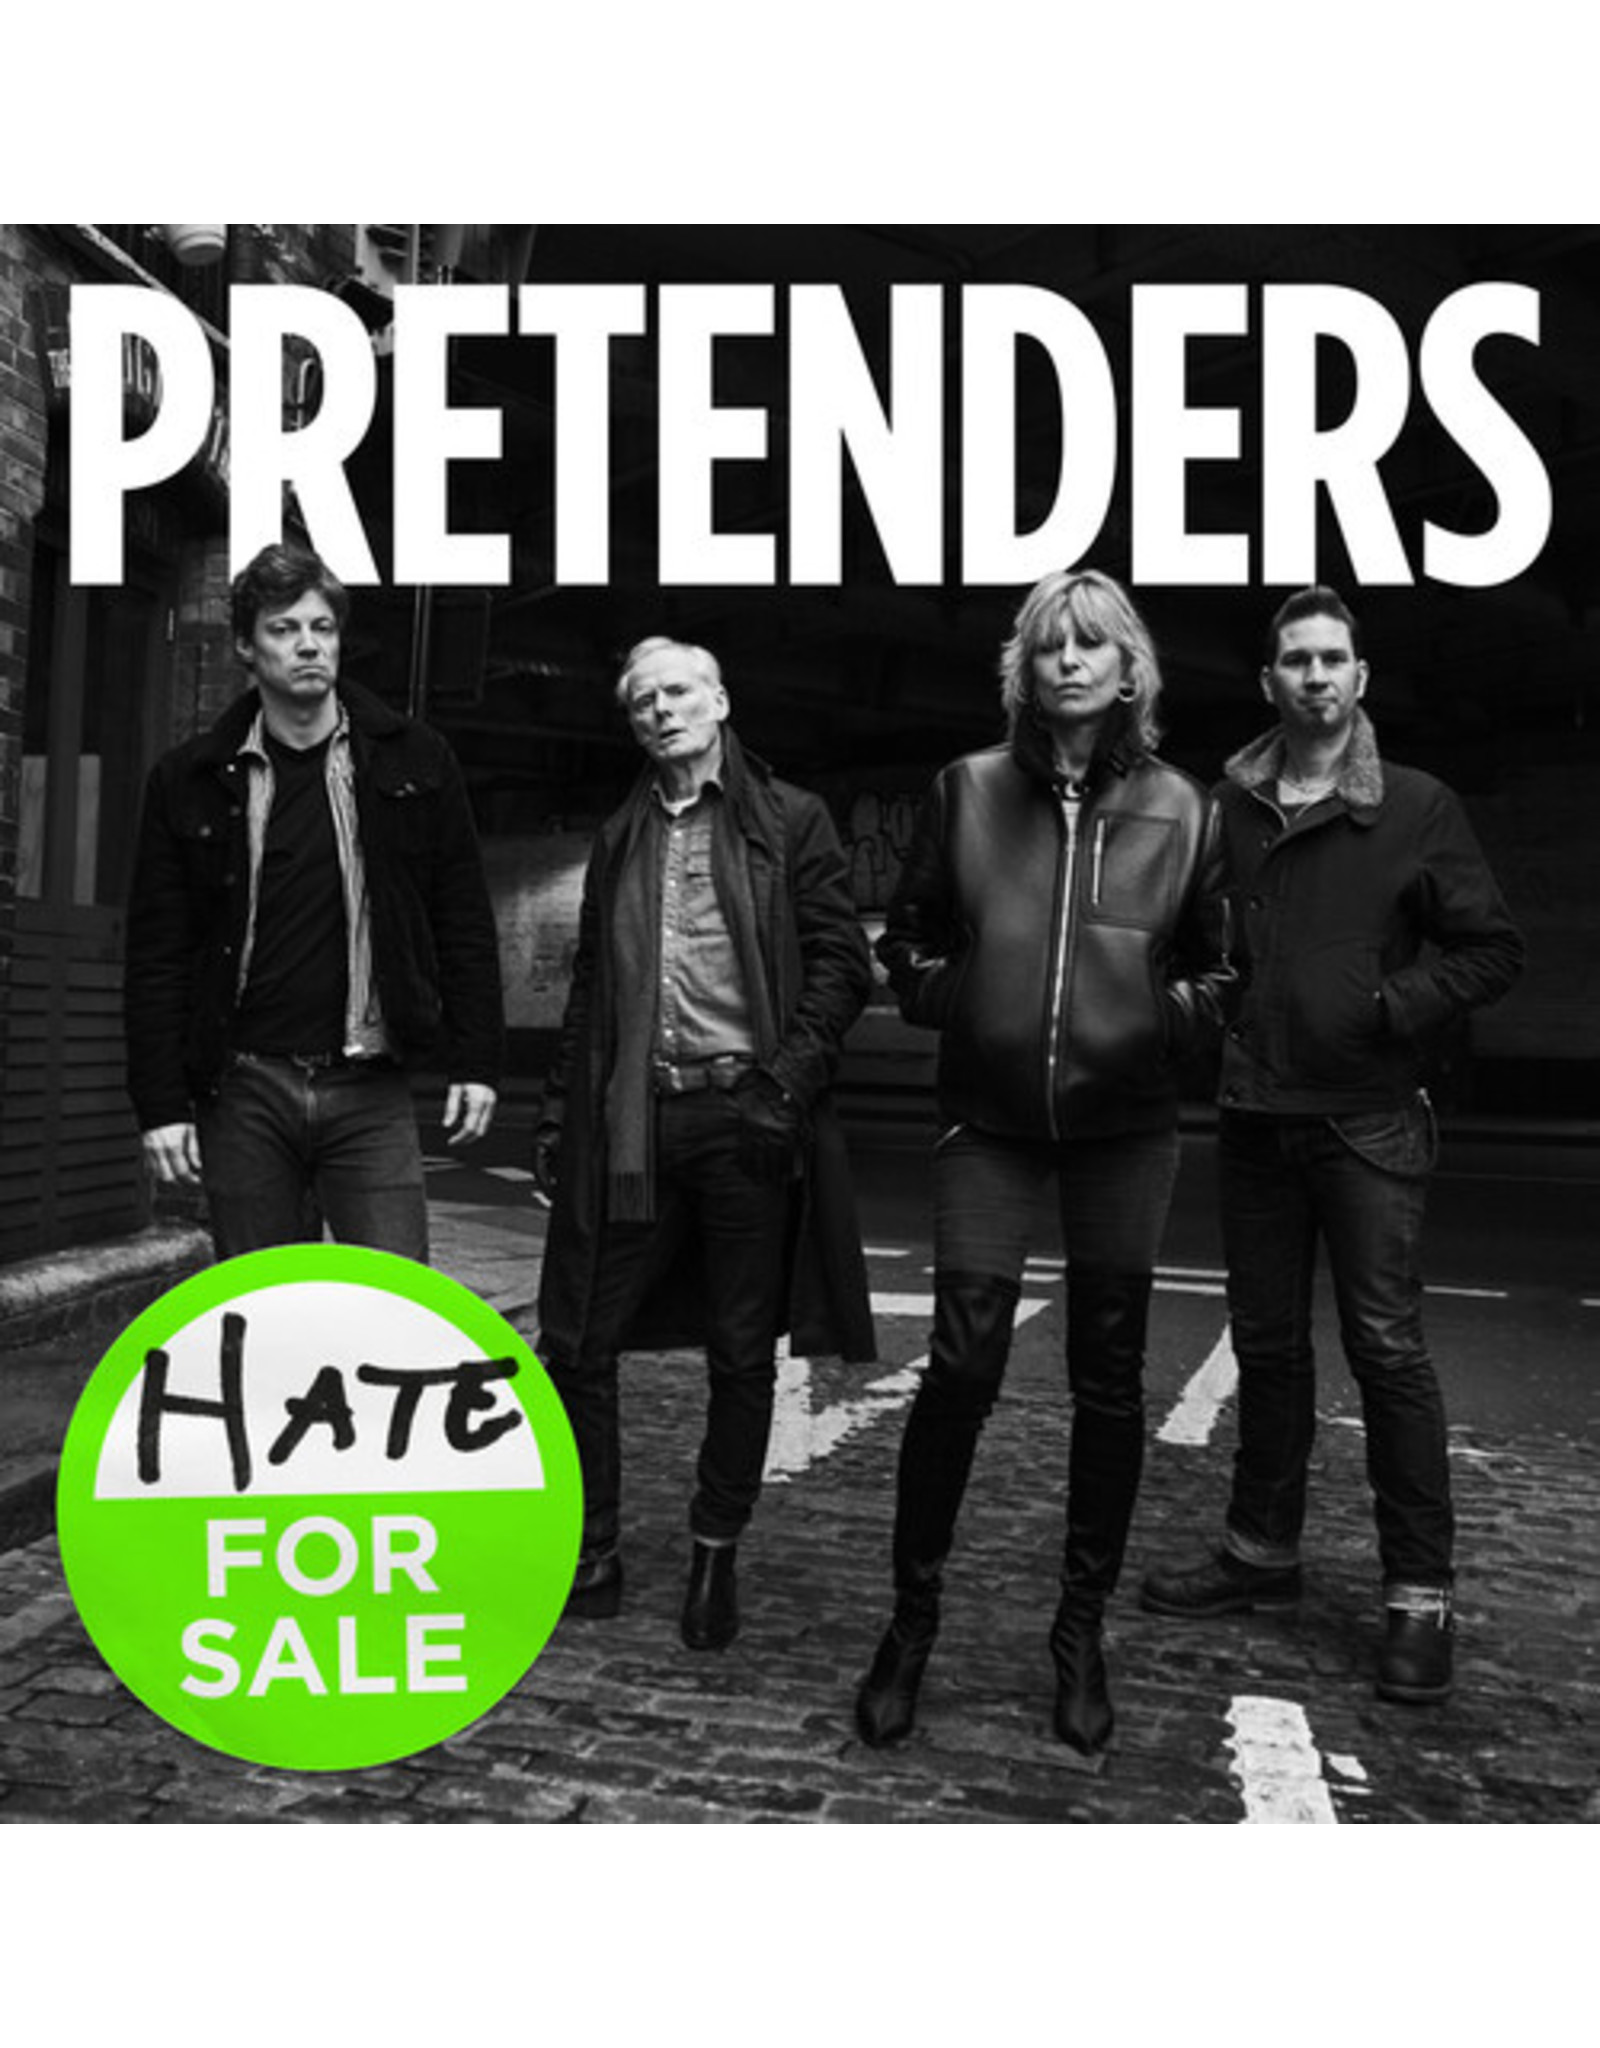 New Vinyl The Pretenders - Hate For Sale LP